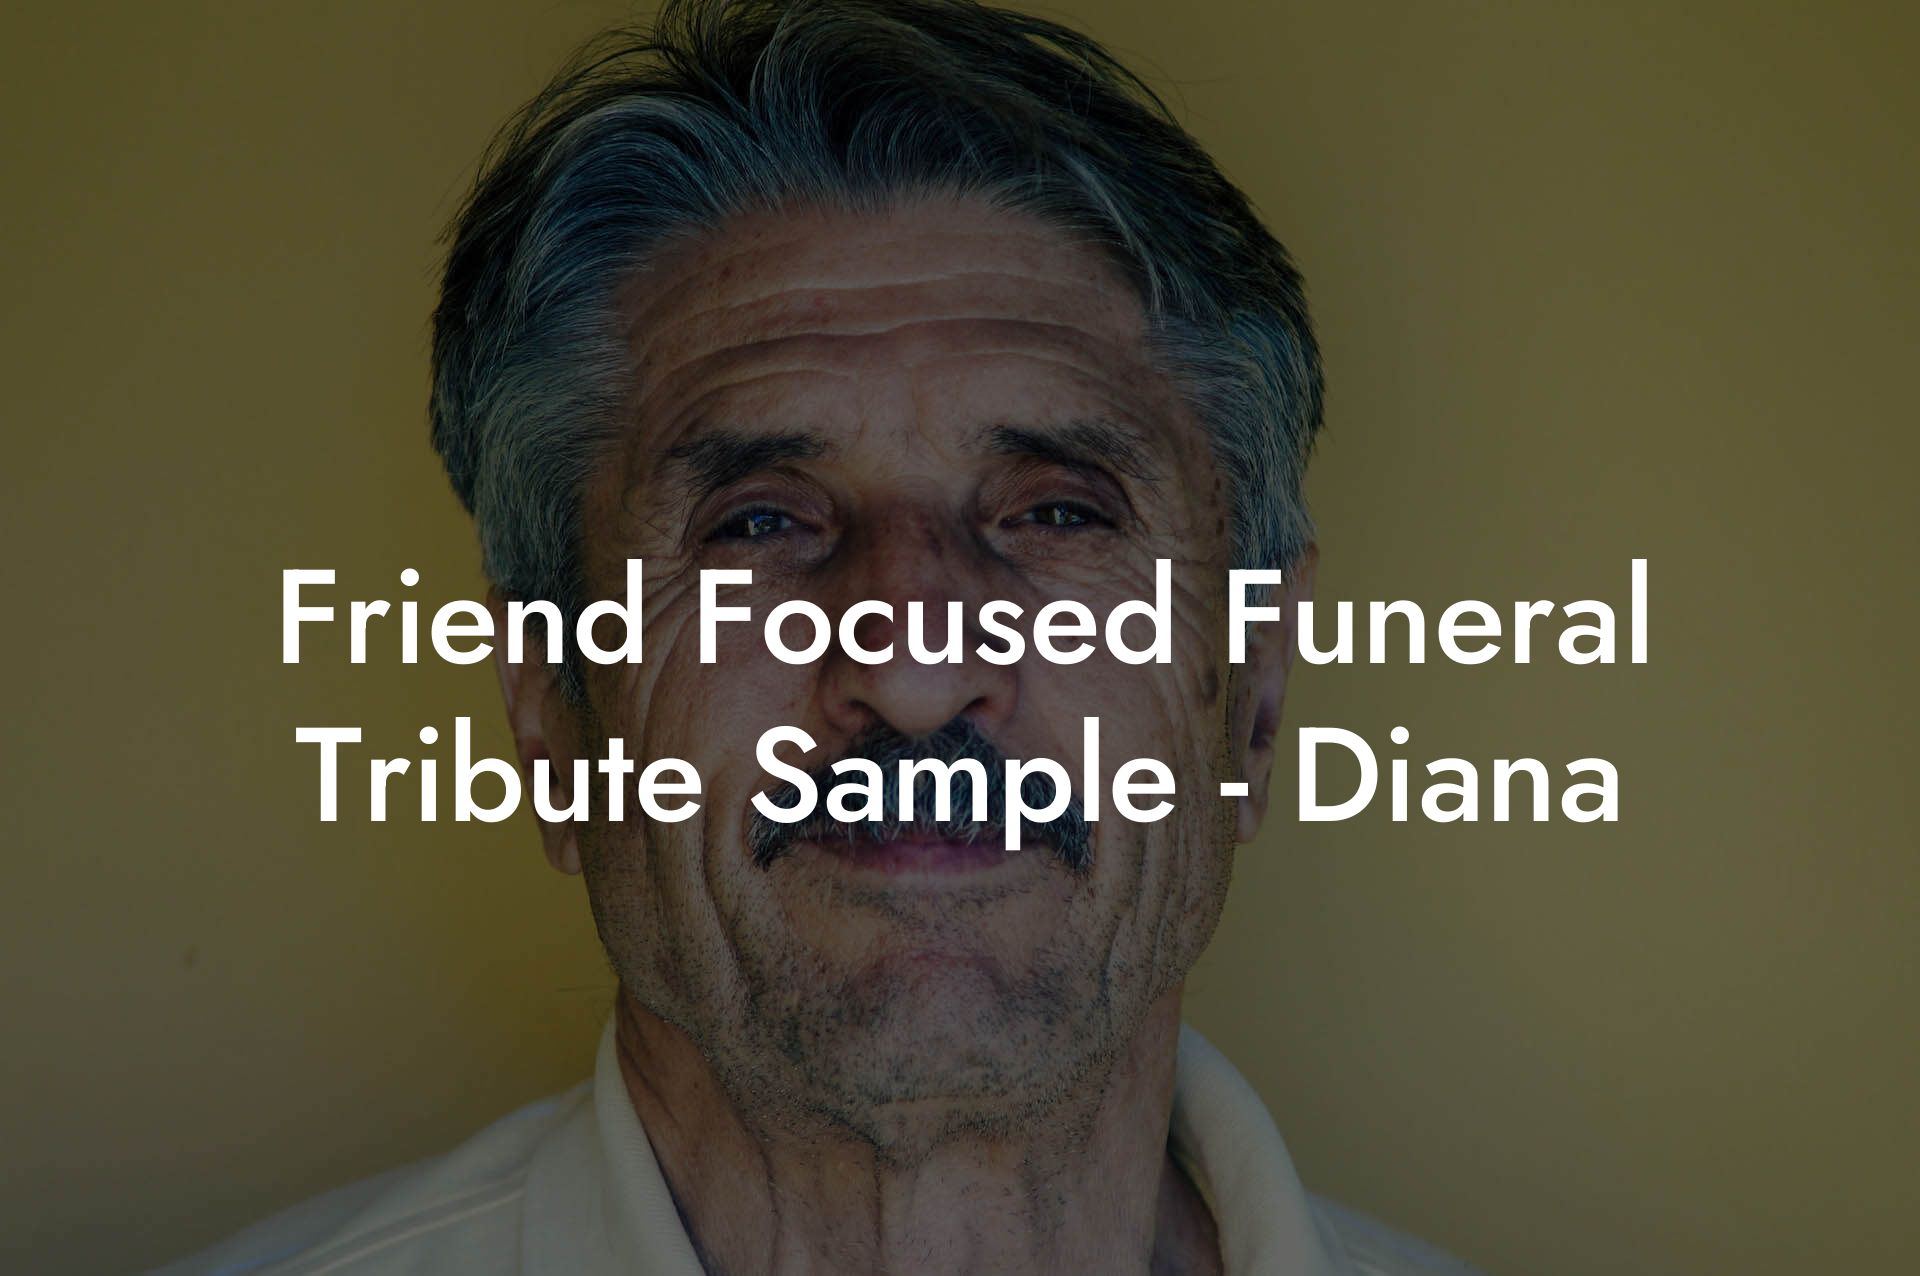 Friend Focused Funeral Tribute Sample - Diana